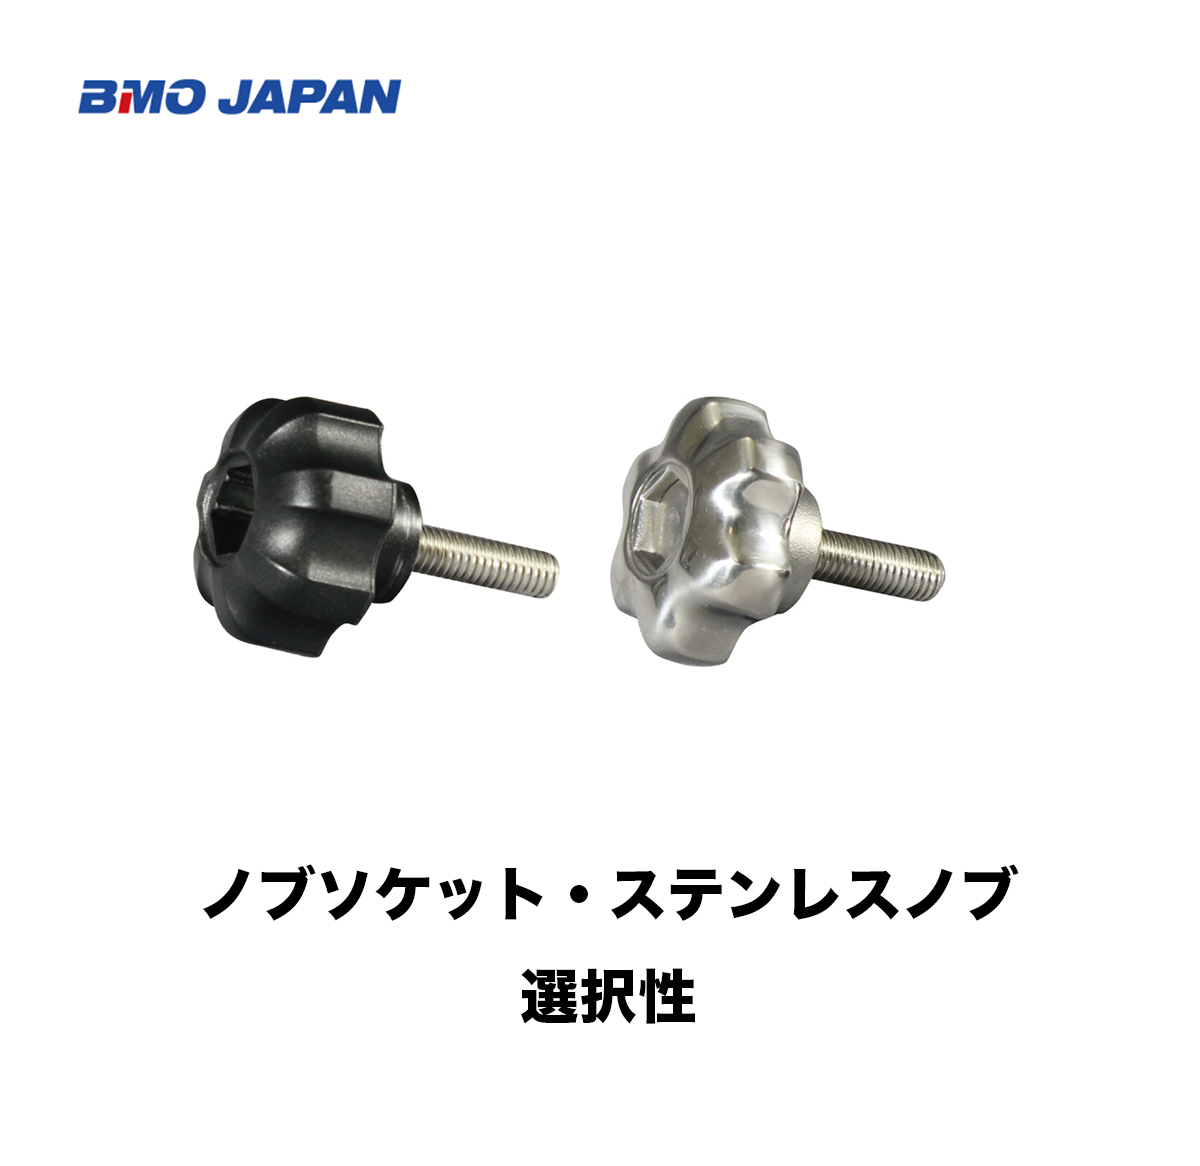 BMO JAPAN(ビーエムオージャパン) パイプクランプソケット 20Z0289